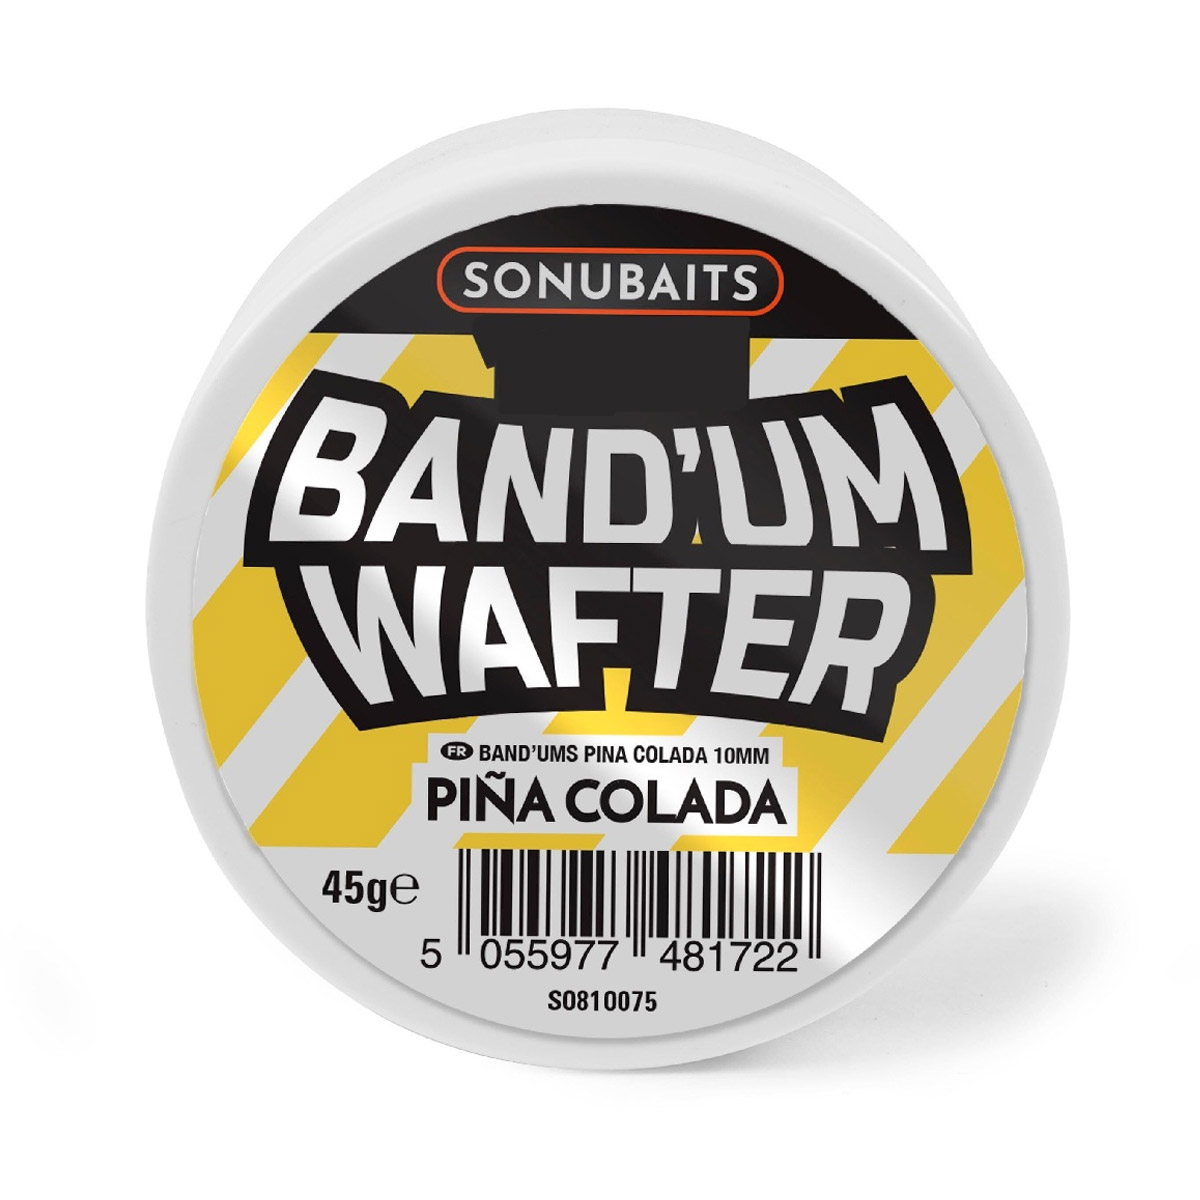 Sonubaits Band'um Wafter Pina Colada